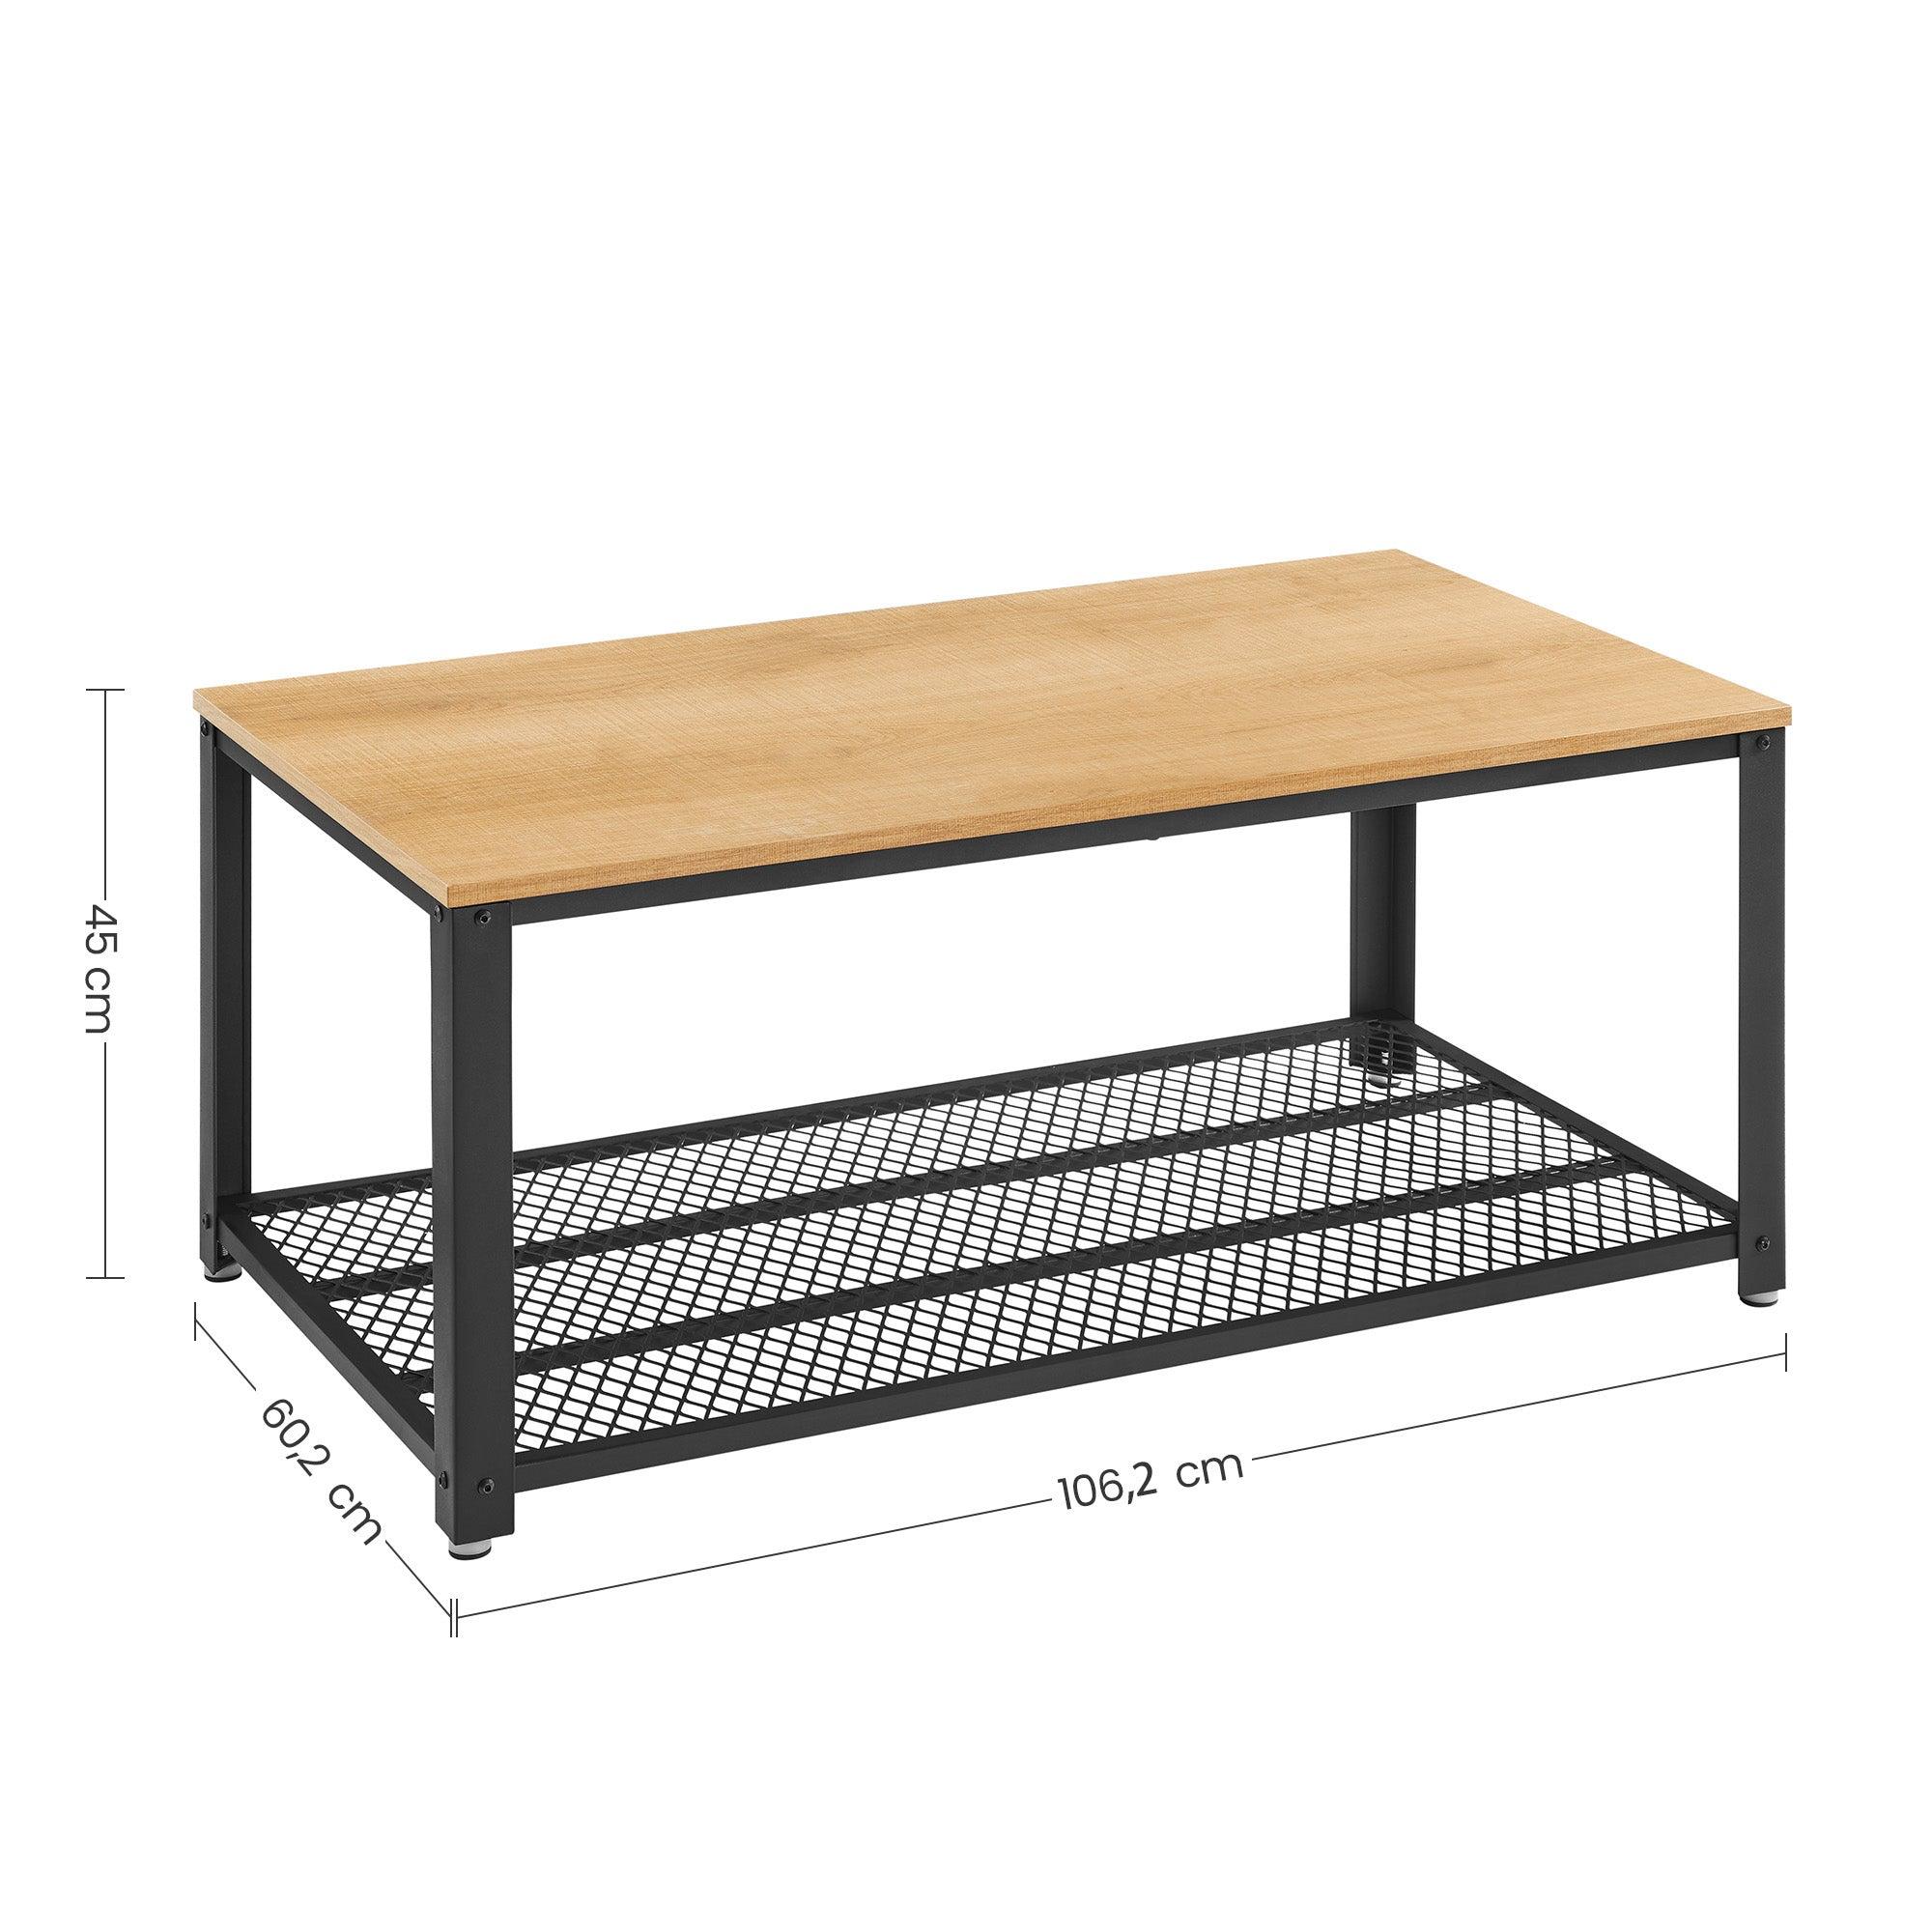 Table basse industrielle JACKY 106,2x45x60,2cm